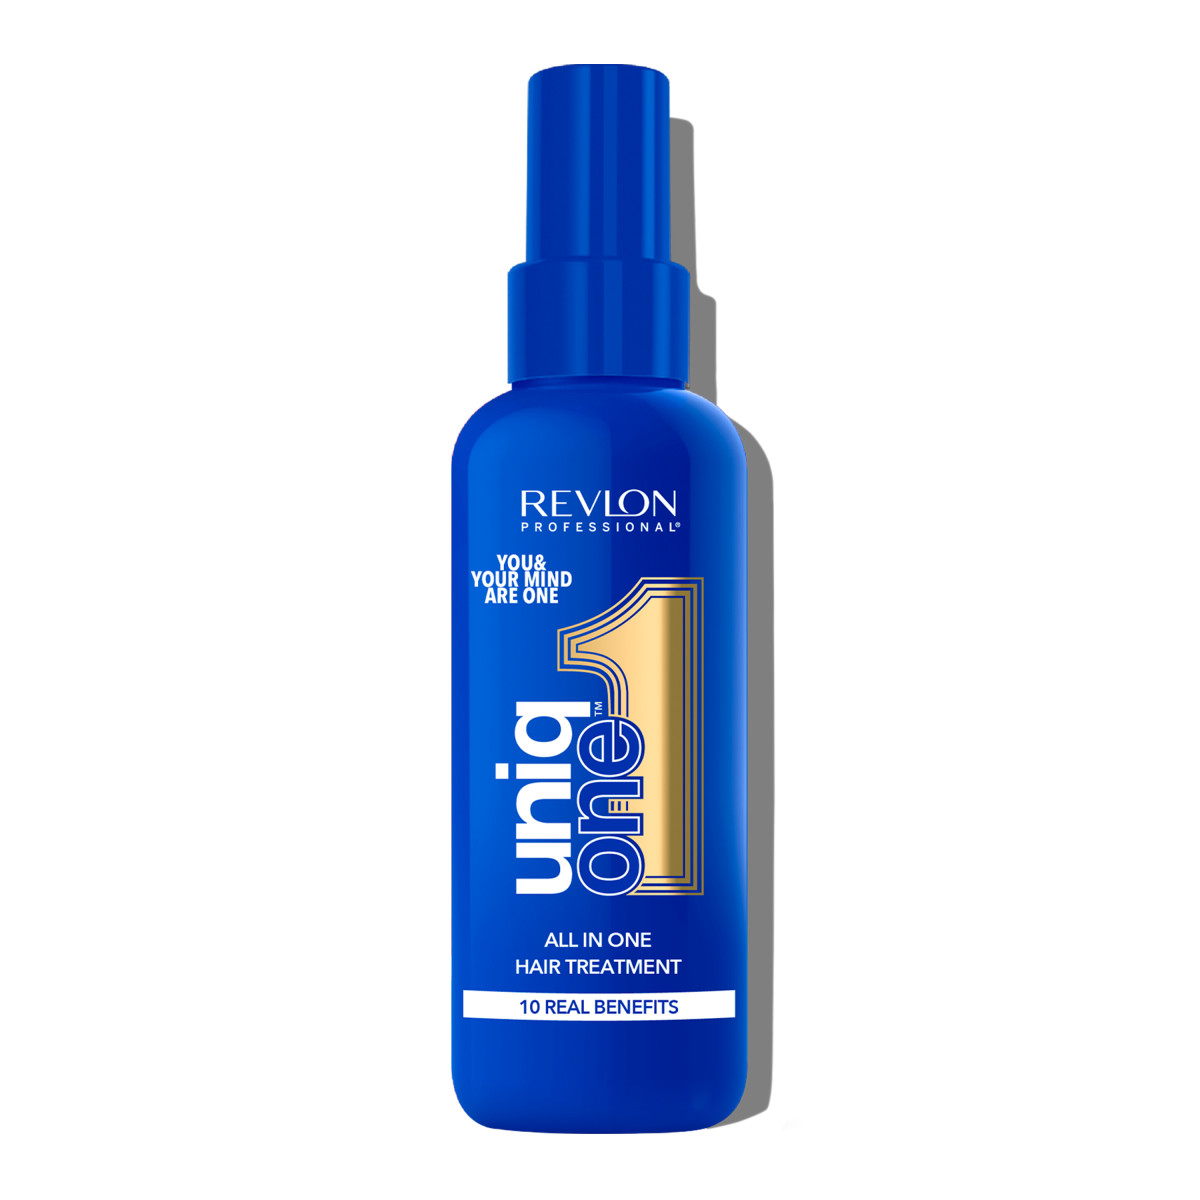 Revlon UniqOne Hair Treatment Mental Health (Limited Edition) 150ml